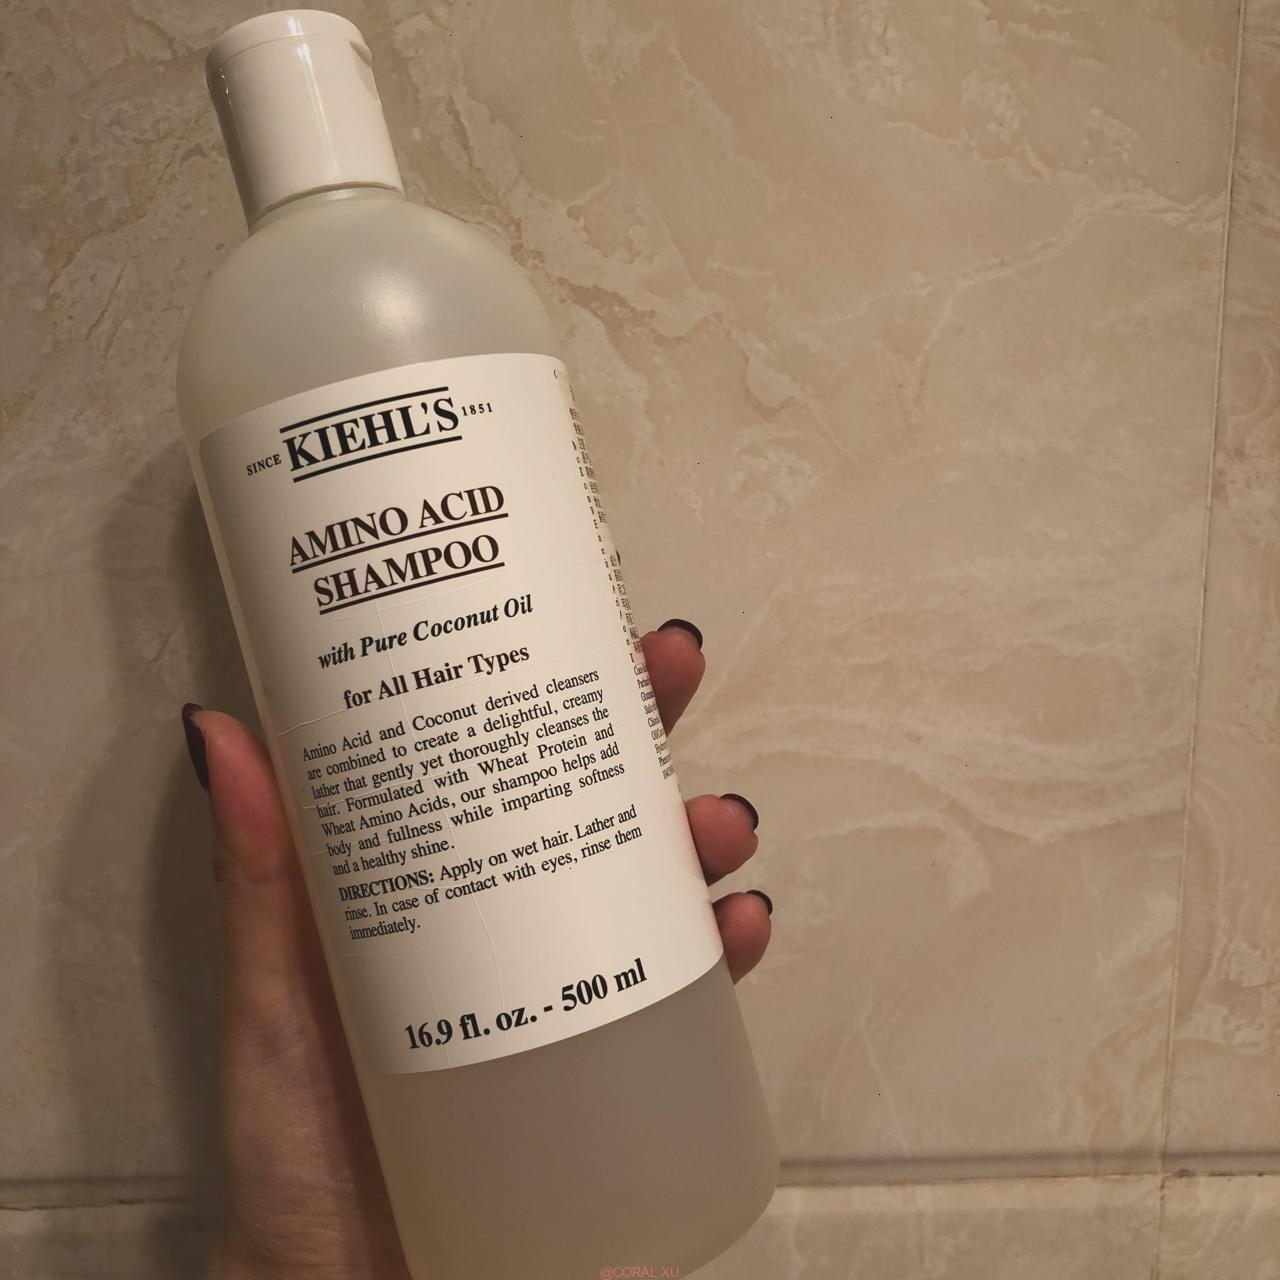 Kiehls Amino Acid Shampoo Review 3 - Kiehl’s Amino Acid Shampoo Review